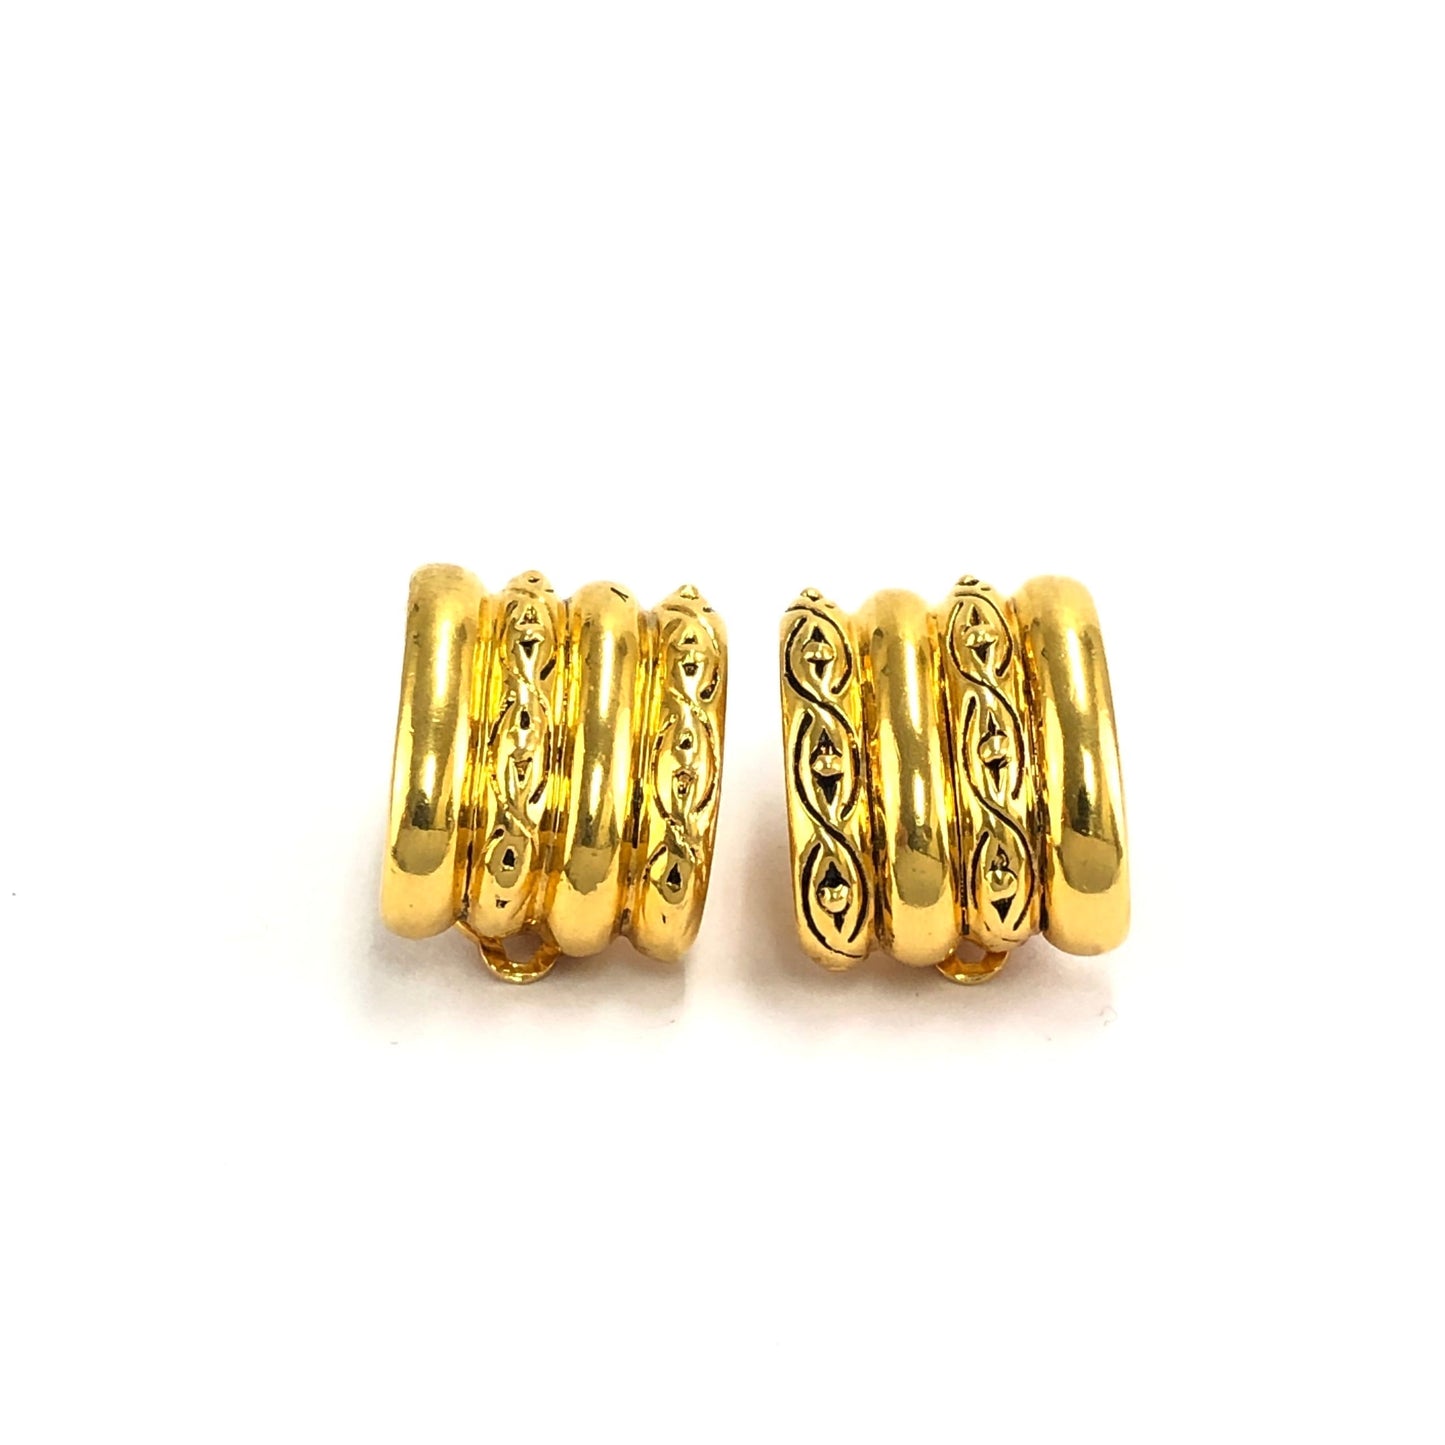 Yves Saint Laurent antique earrings gold vintage old accessories cb2him